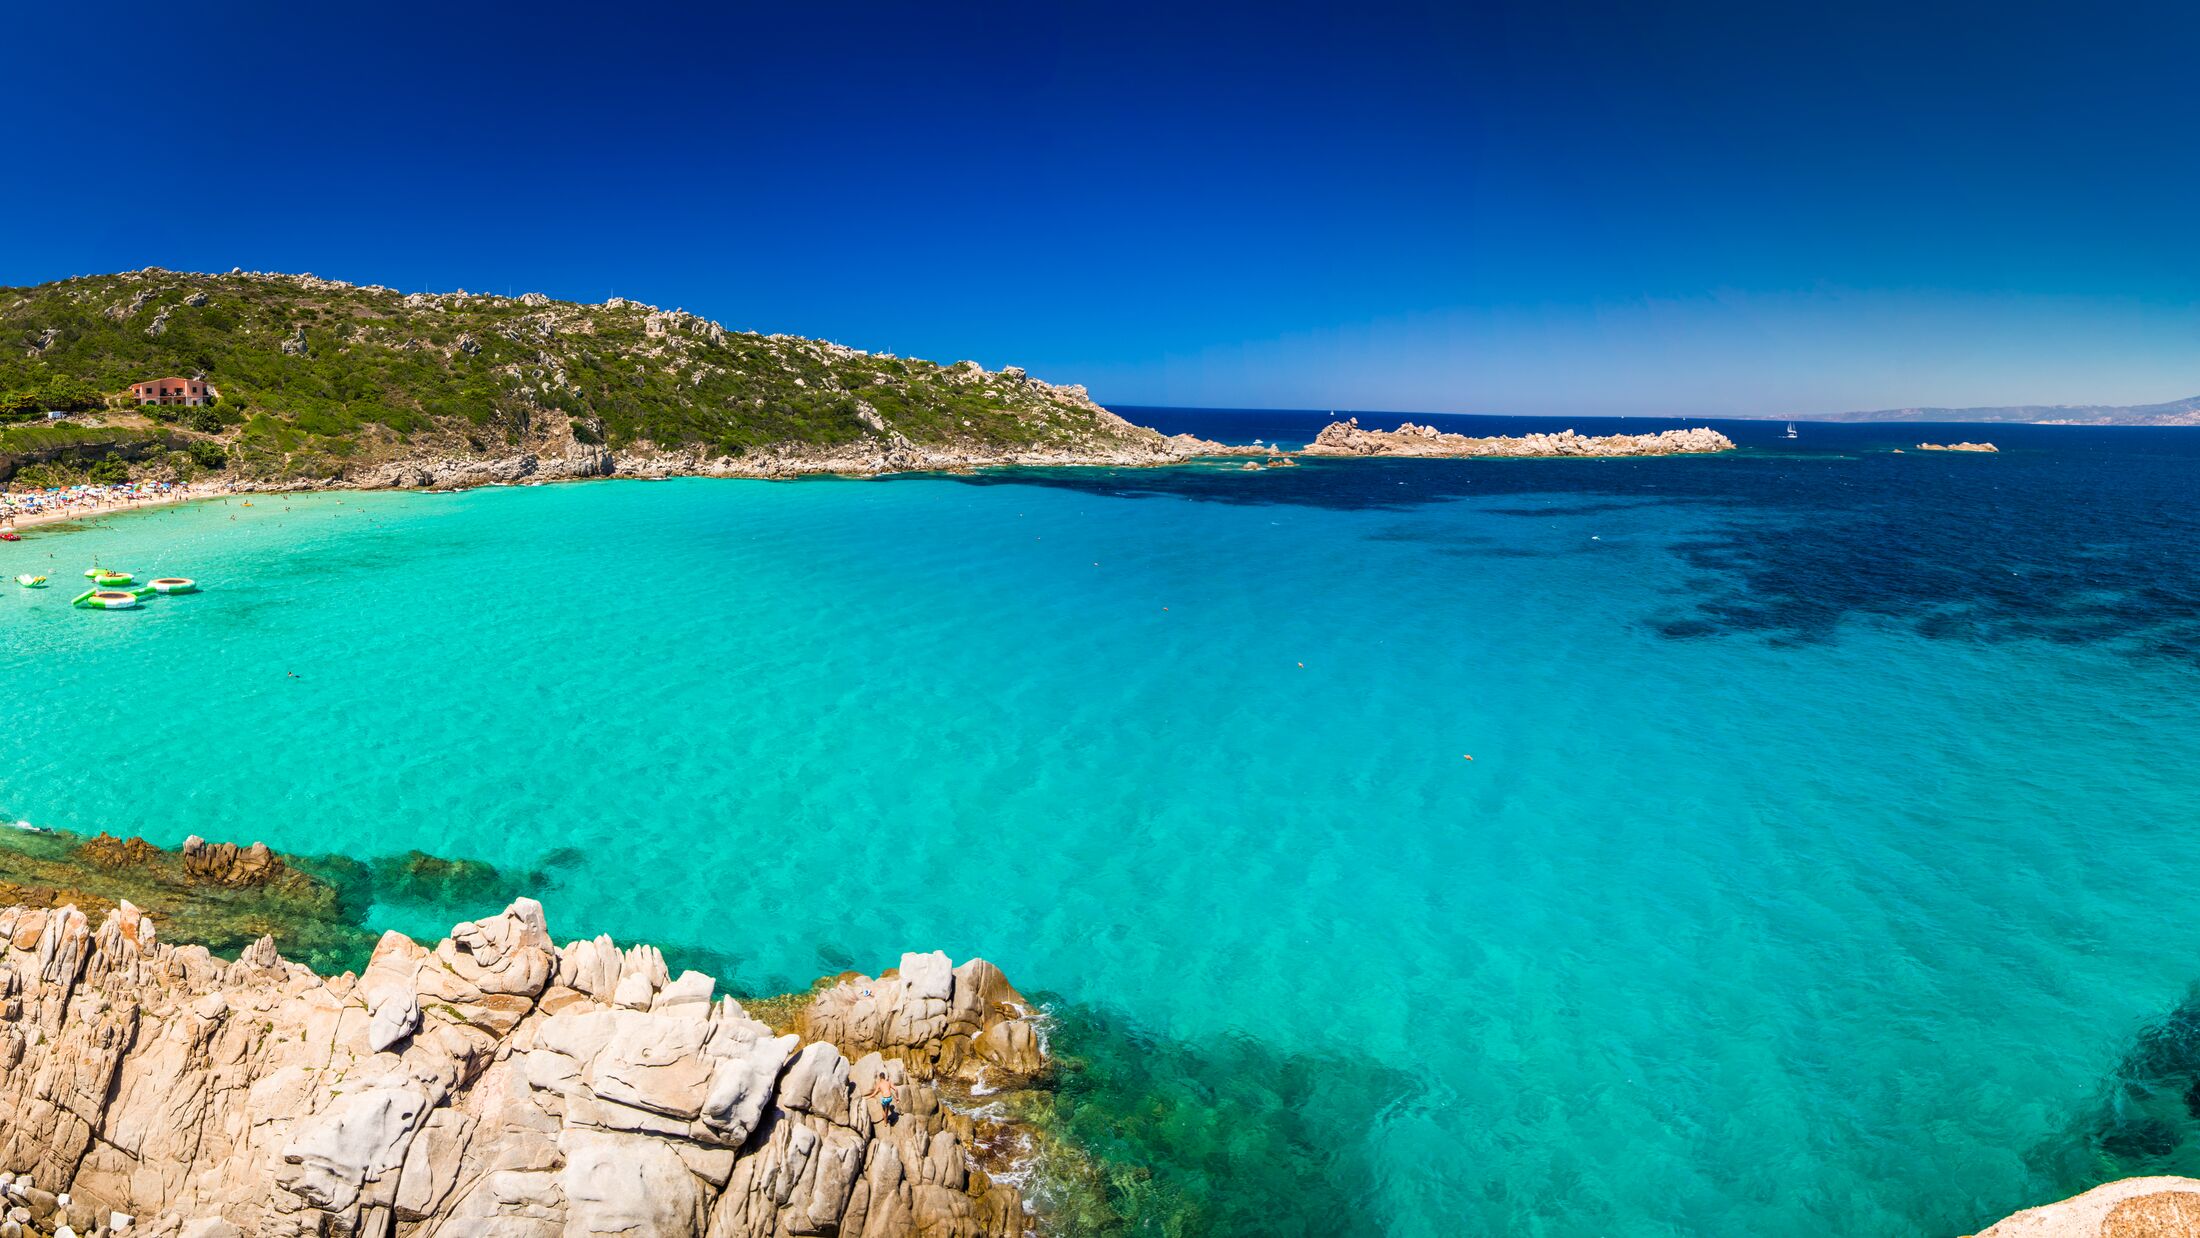 Spiaggia di Rena Bianca beach with red rocks and azure clear water, Santa Terasa Gallura, Costa Smeralda, Sardinia, Italy.